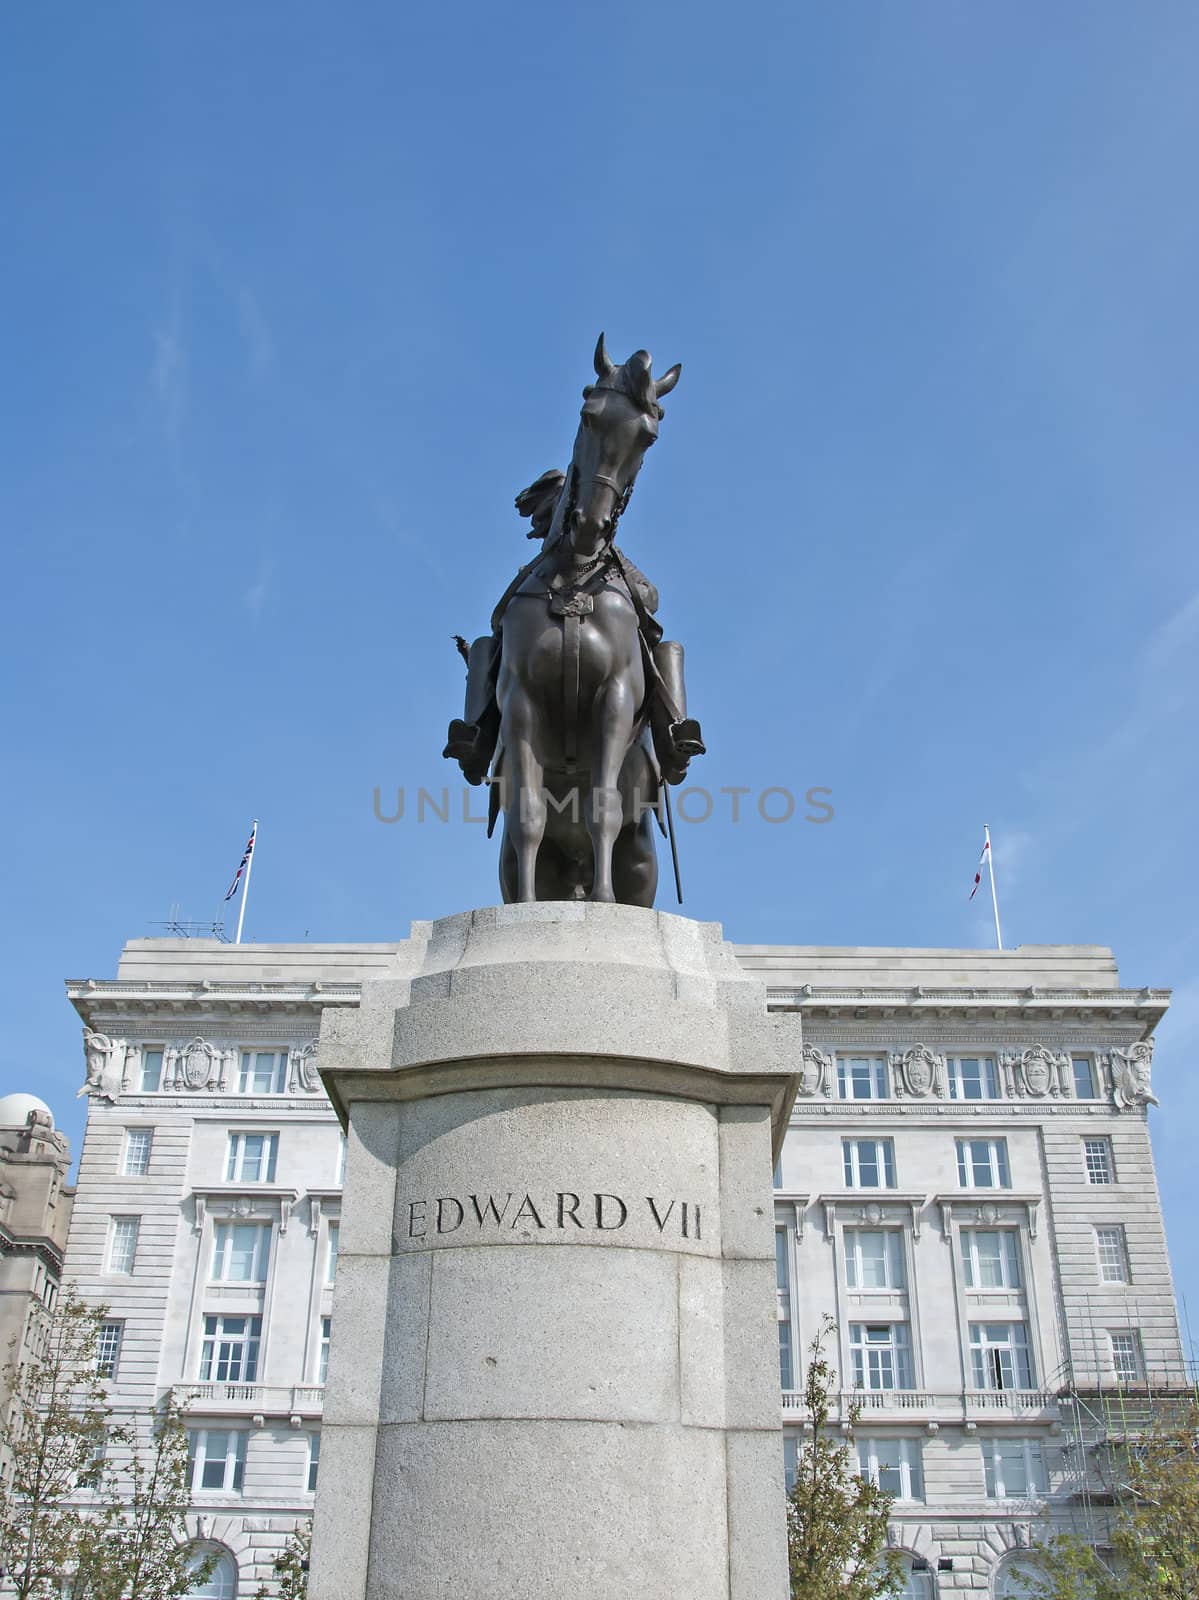 Edward VII Statue2 by d40xboy